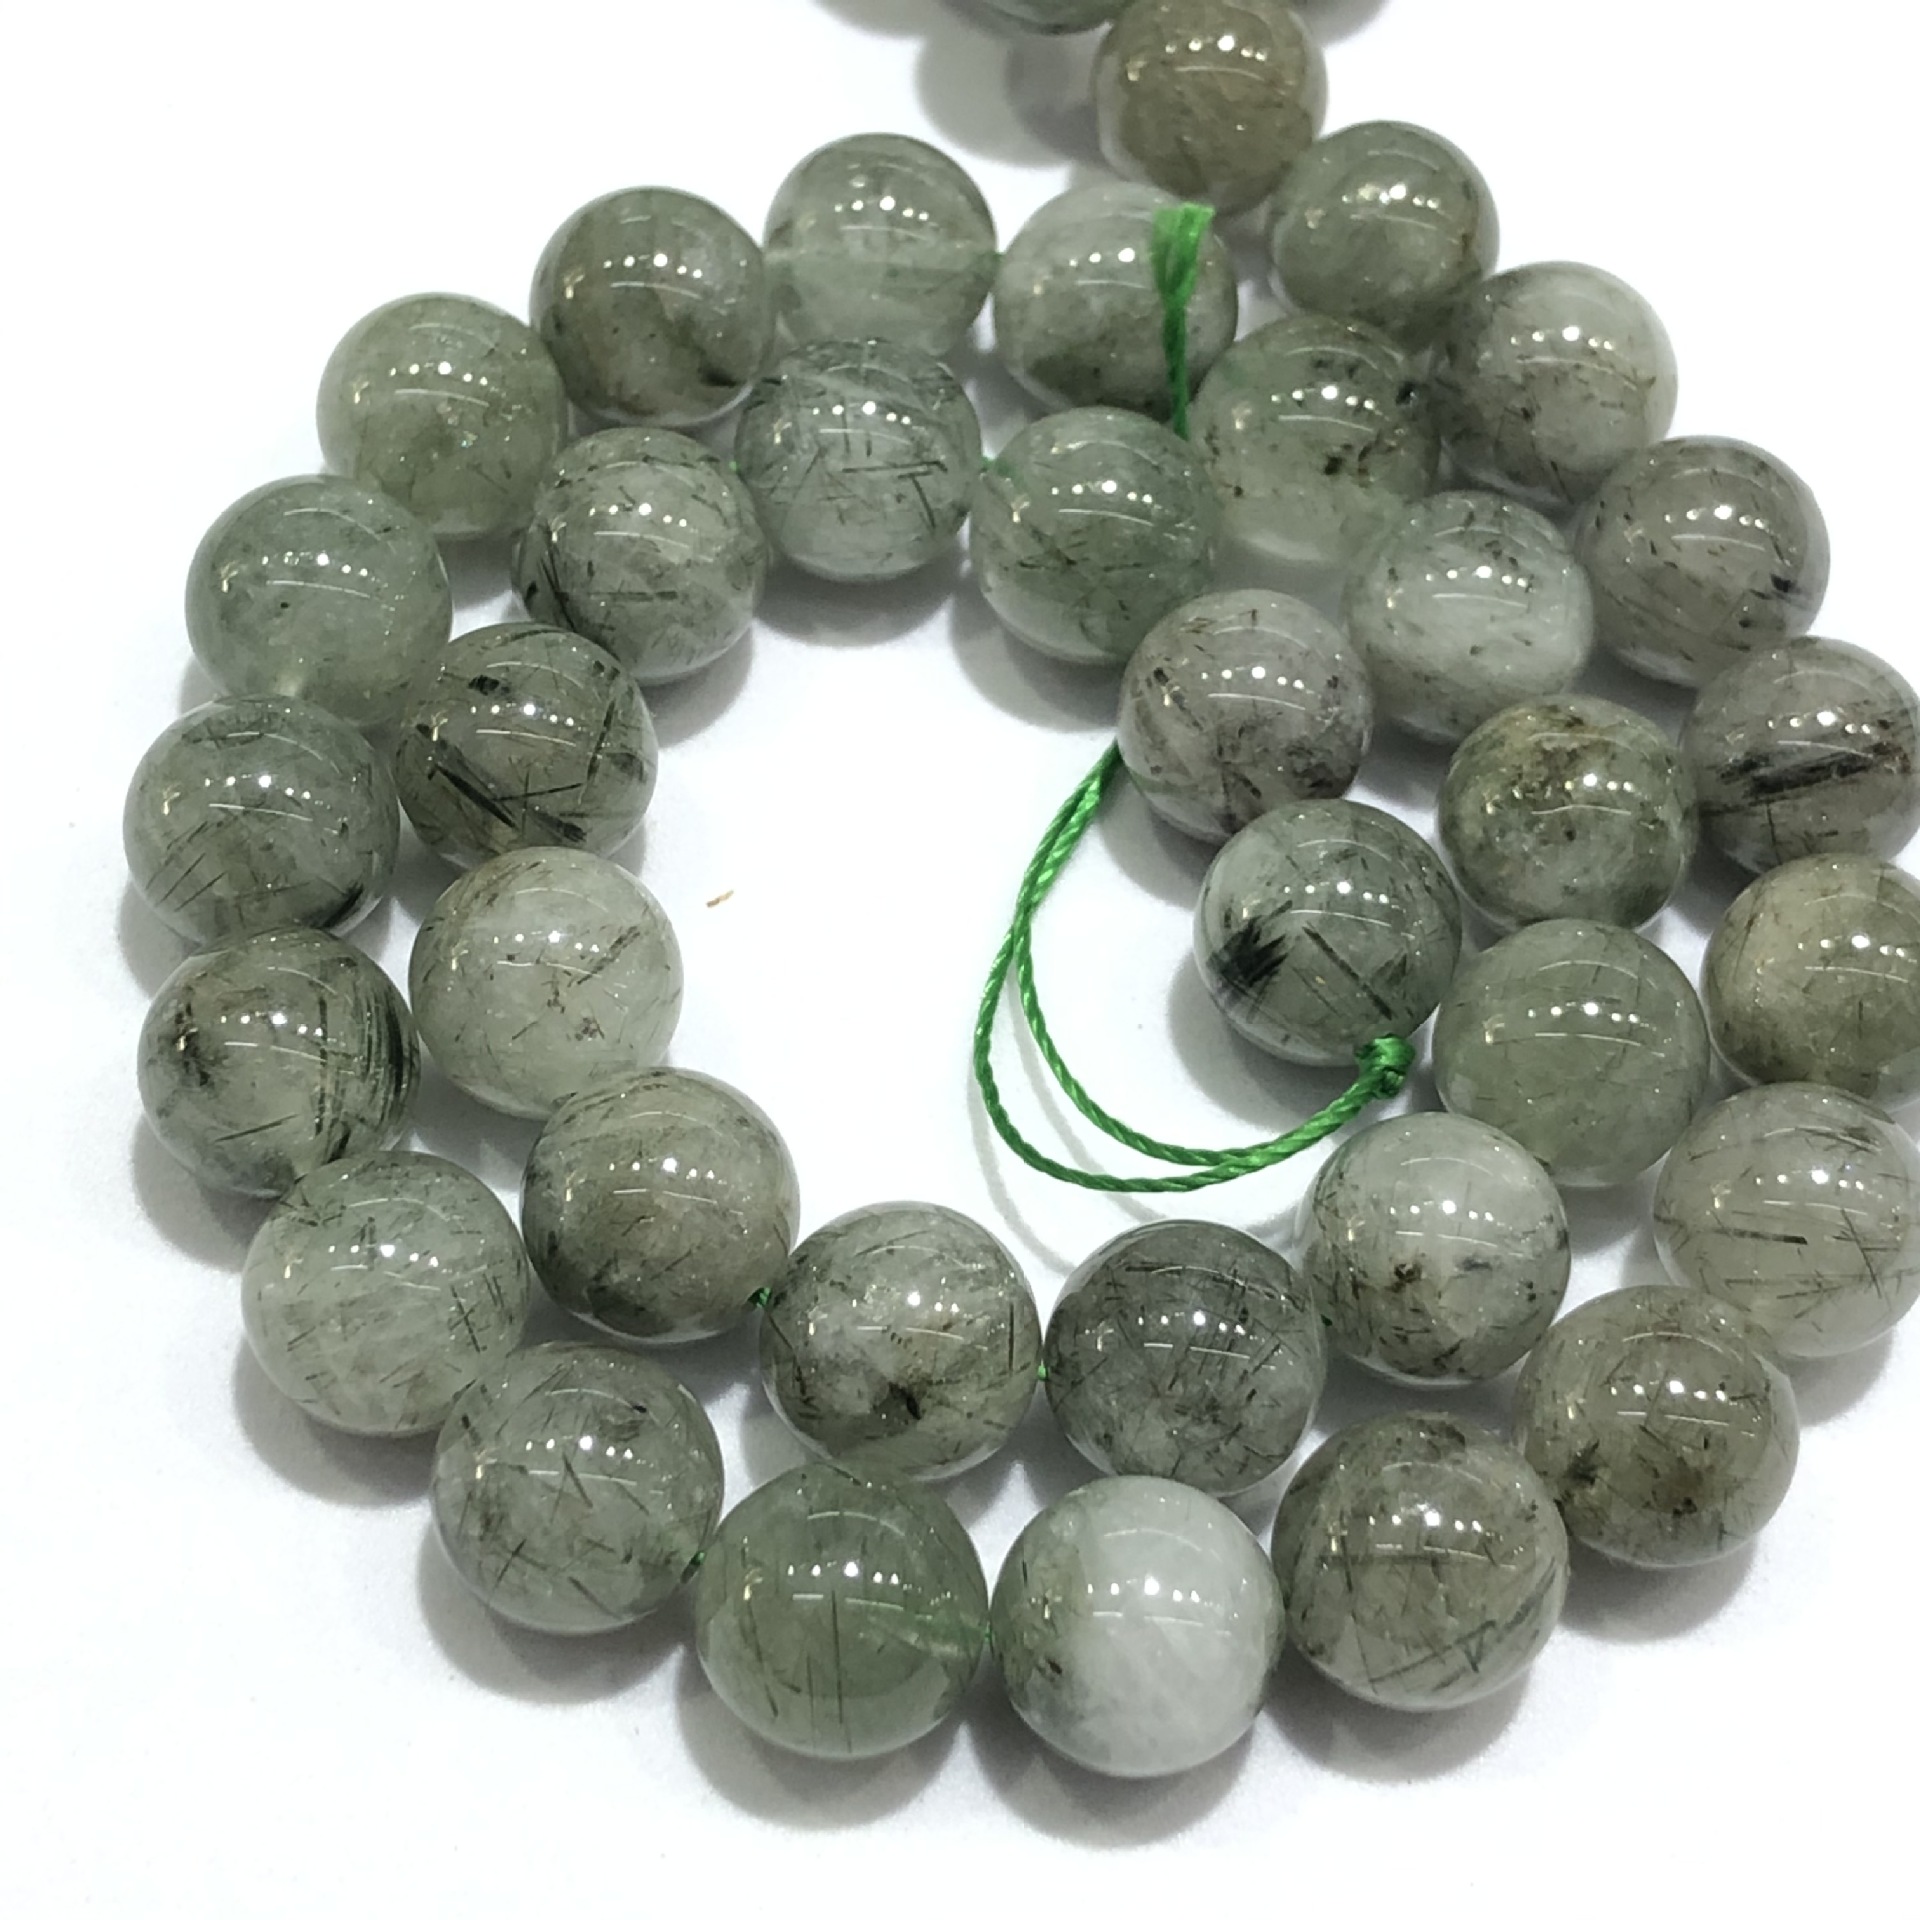 5A green hair crystal 10mm